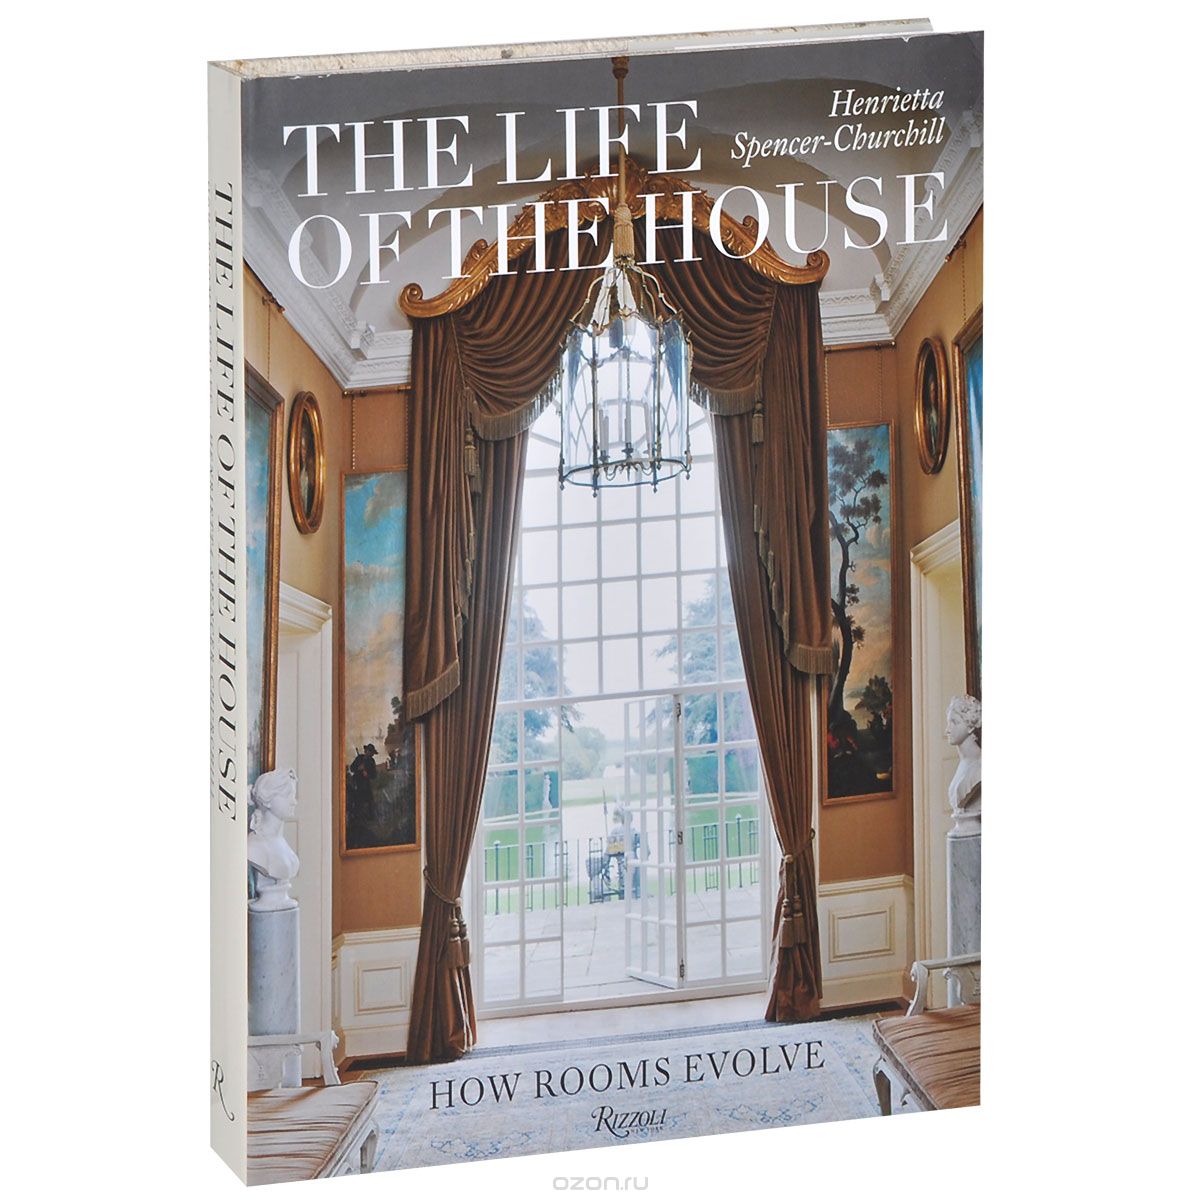 Скачать книгу "The Life of the House: How Rooms Evolve"